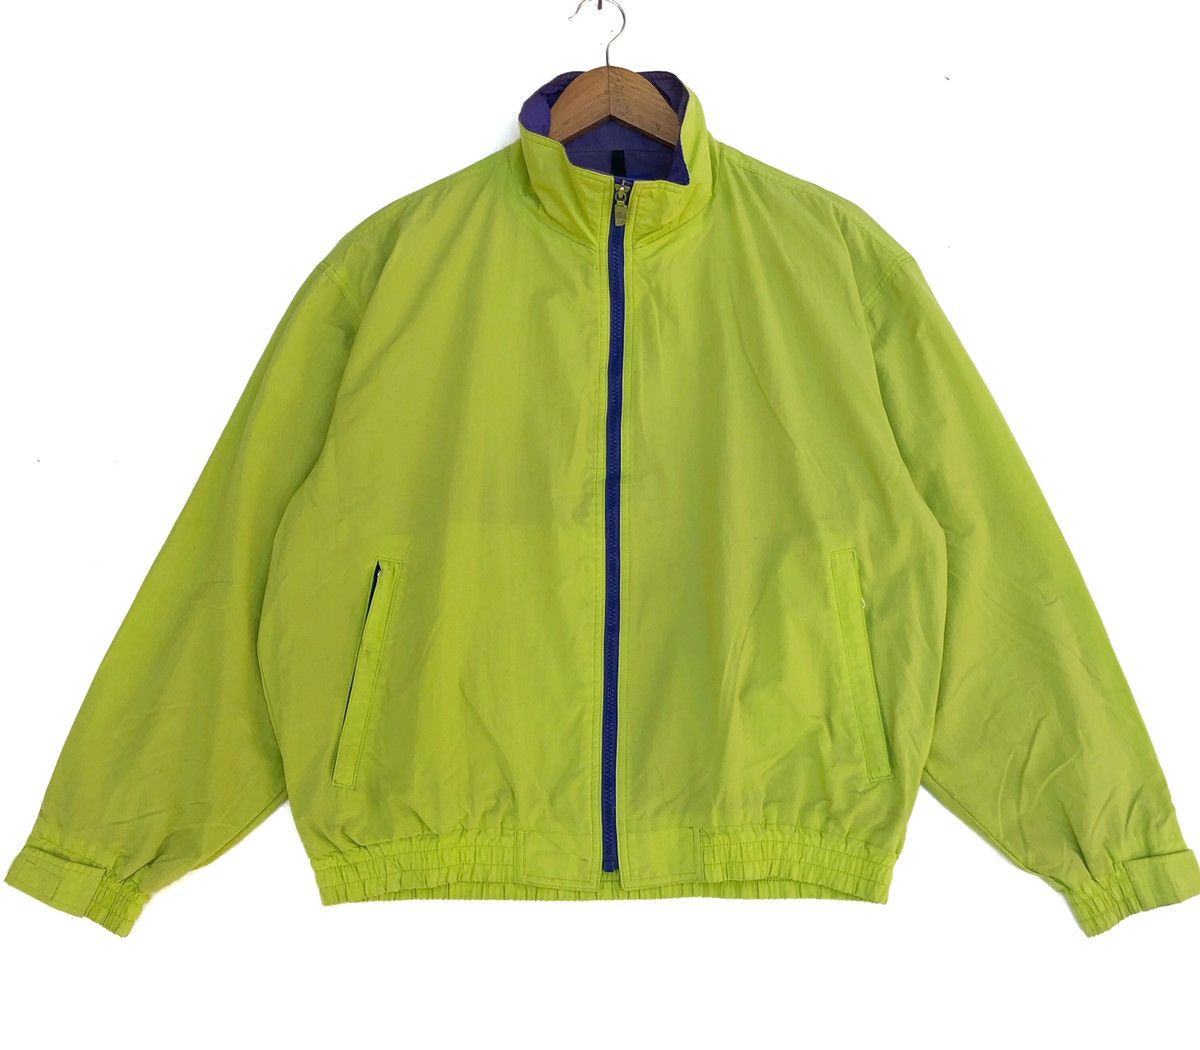 ❄️THE NORTH FACE Neon Green Windbreaker Zip Jacket - 2